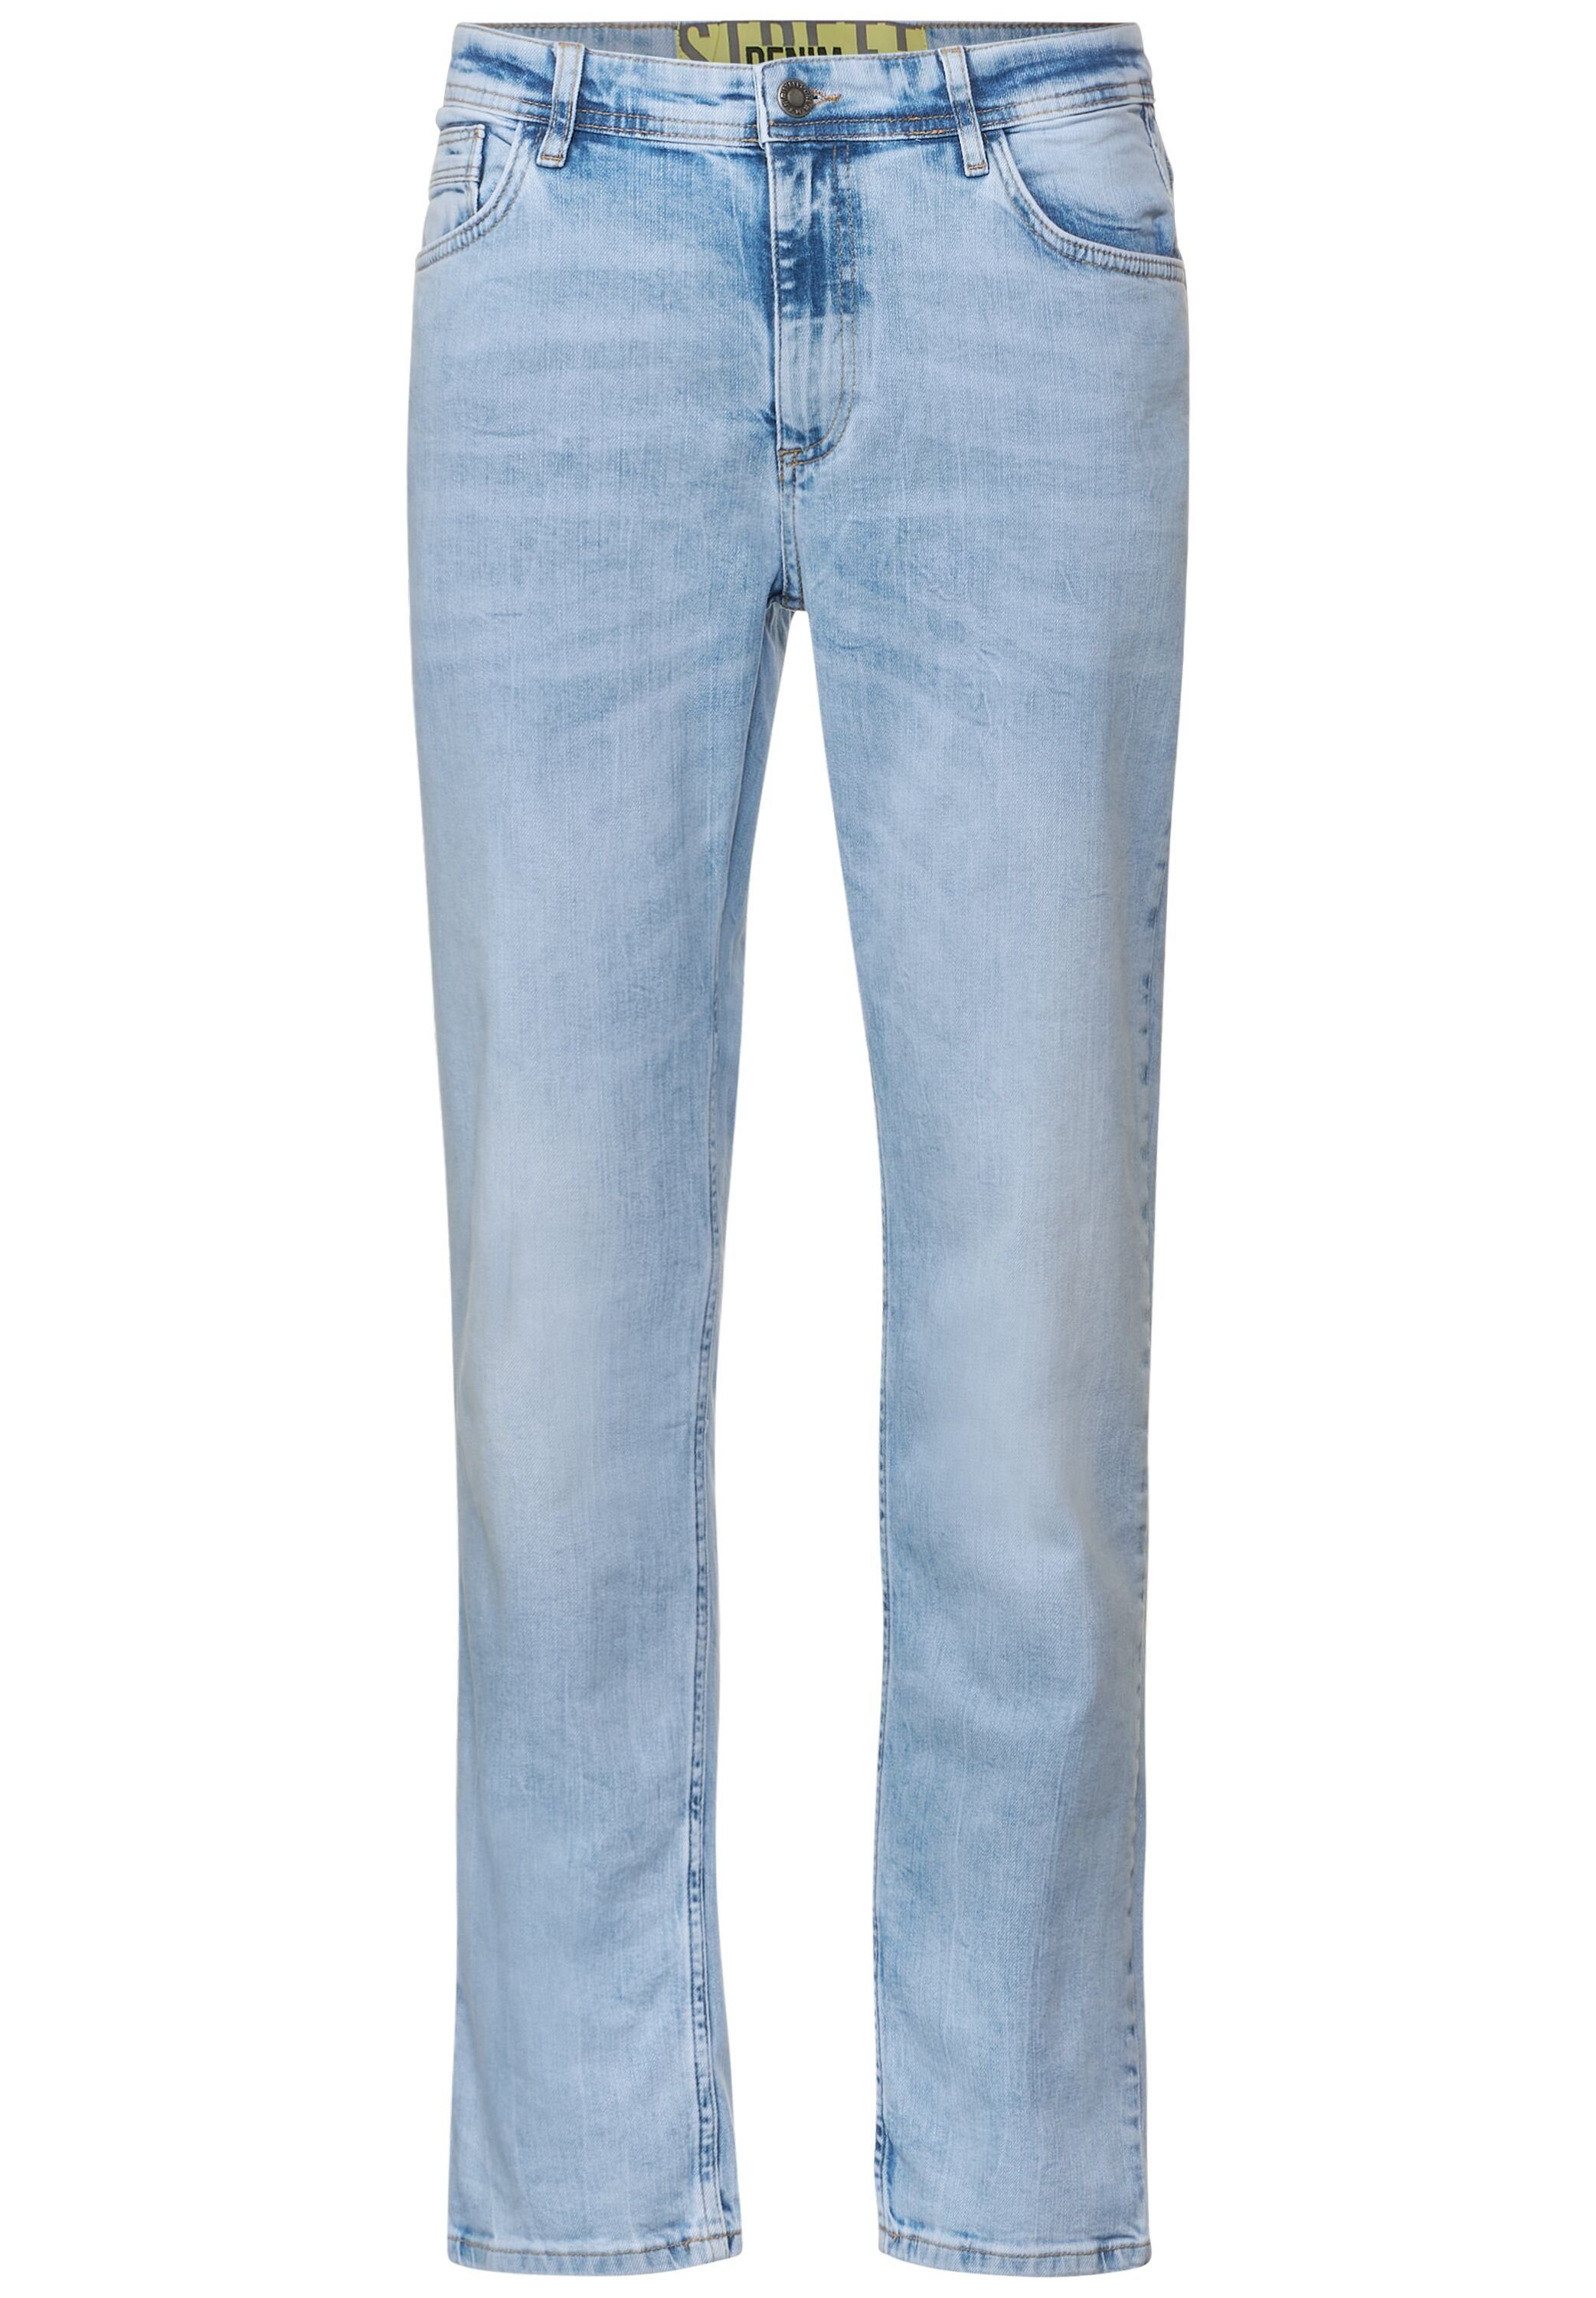 ONE MEN 5-Pocket-Style Jeans Gerade STREET